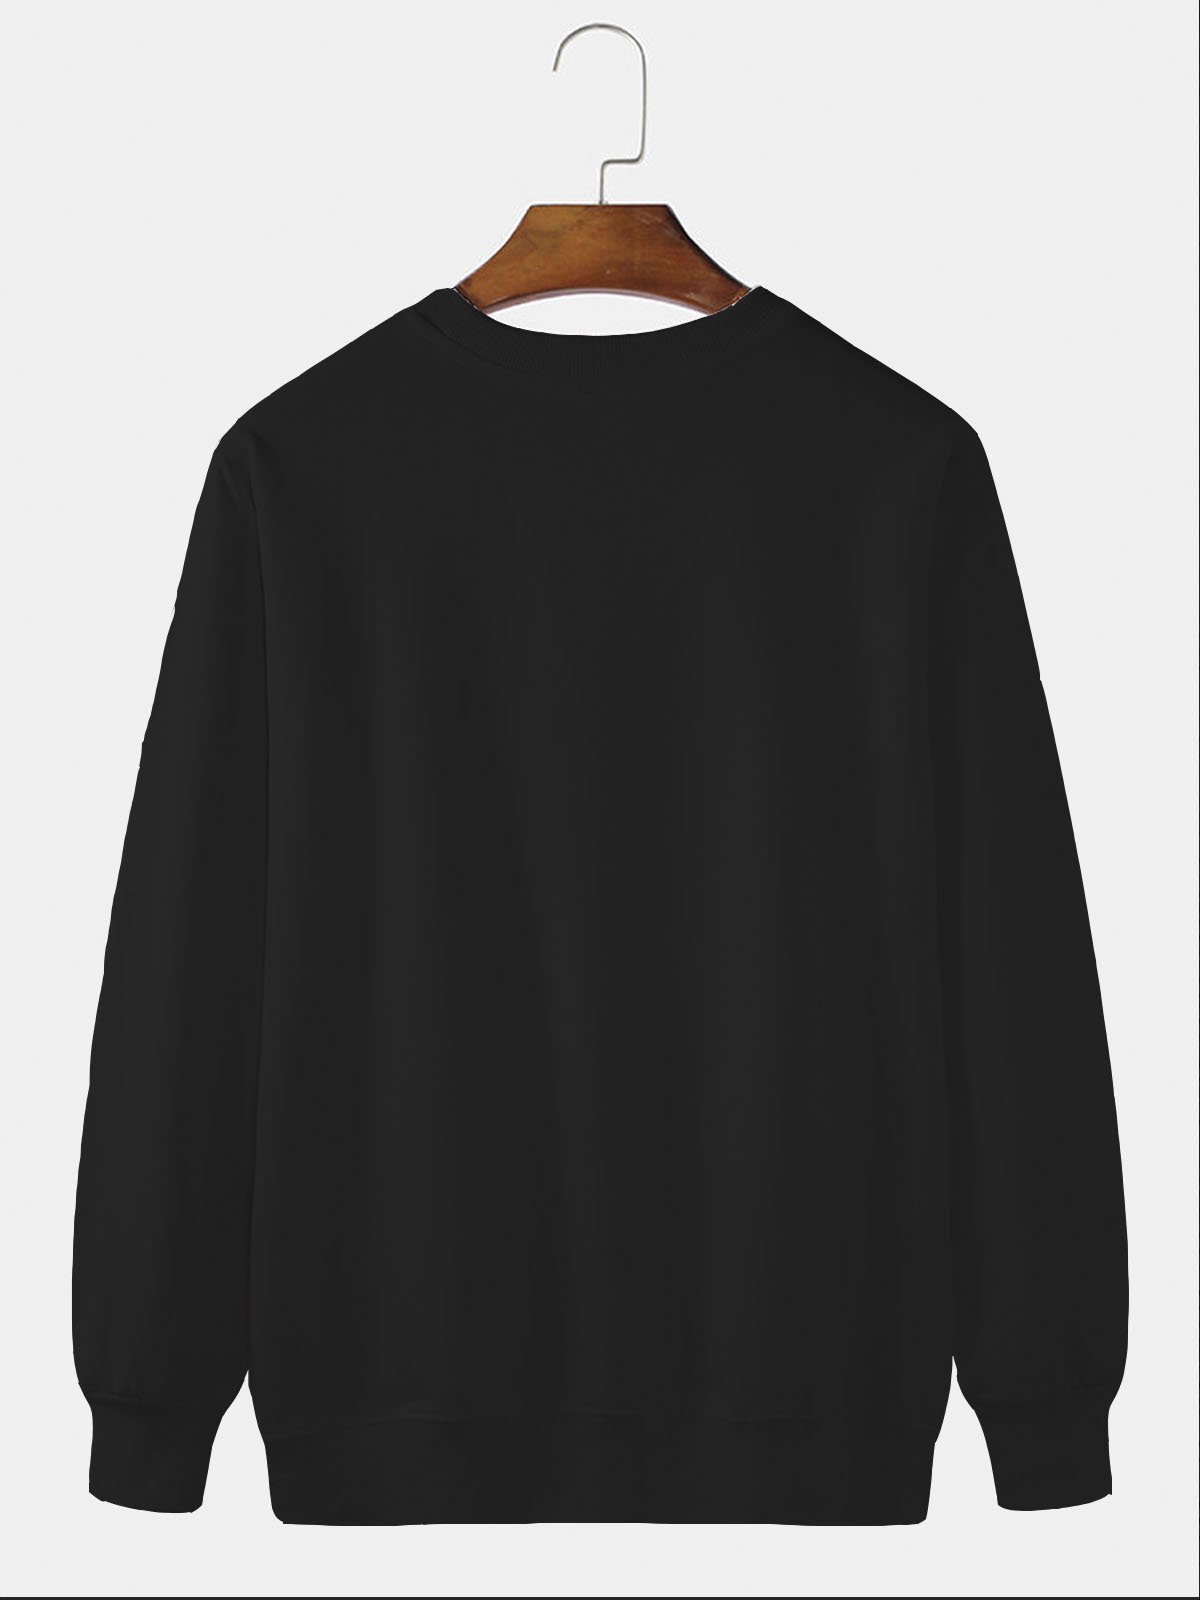 JoyMitty Vintage Men's Round Neck Pullover Sweatshirts  Stretch Warm We The People Are Pissed Of Sweatshirts